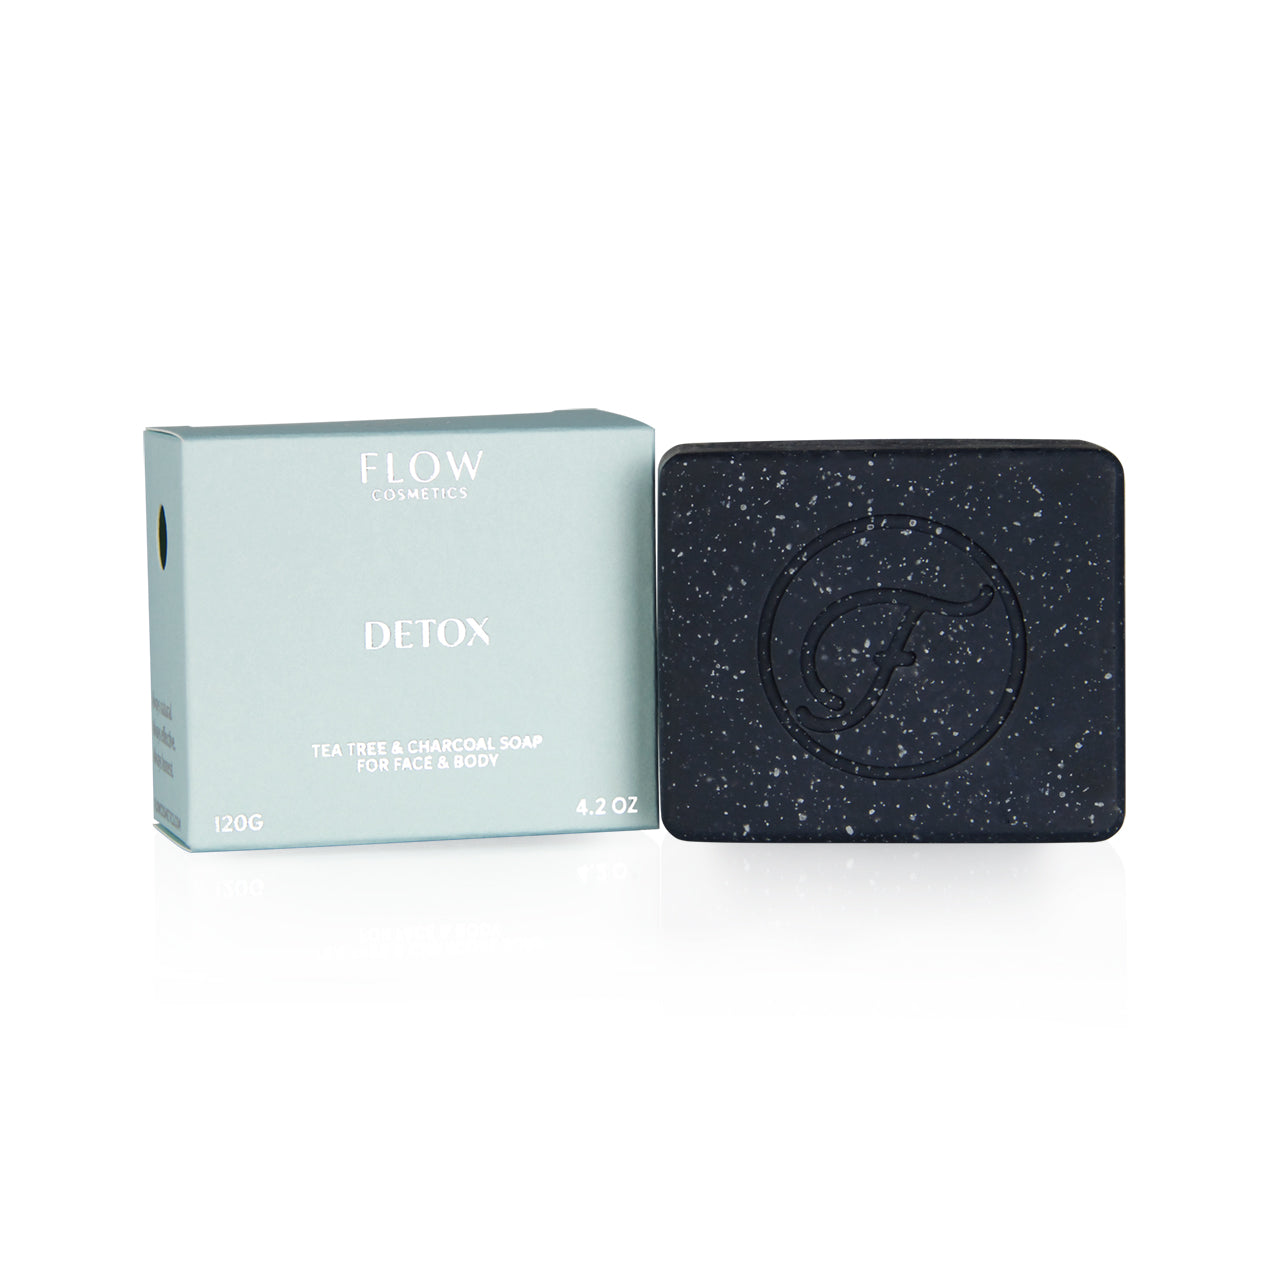 Flow Detox Tea Tree & Charcoal Soap - Teepuusaippua kasvoille- ja vartalolle 120 g